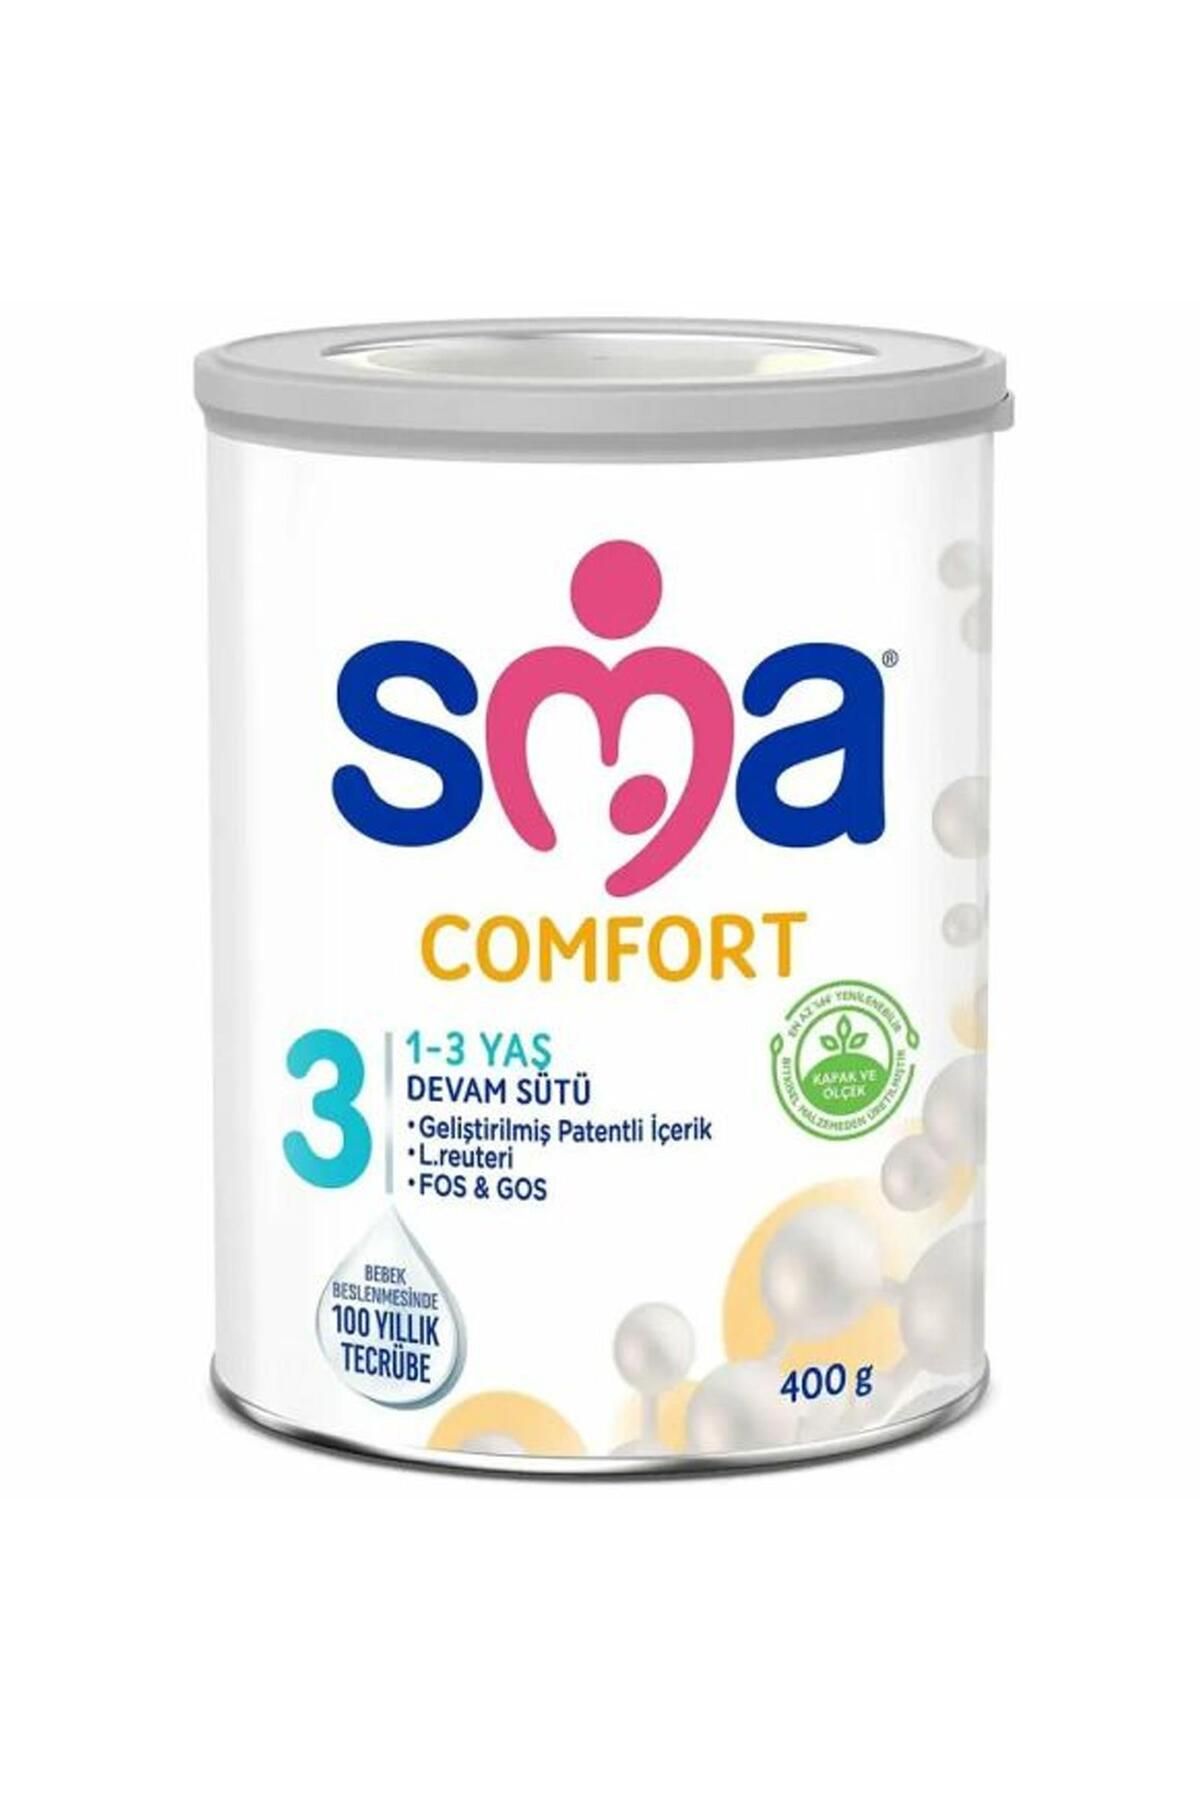 SMA Comfort 3 Devam Sütü 1-3 Yaş 400 gr